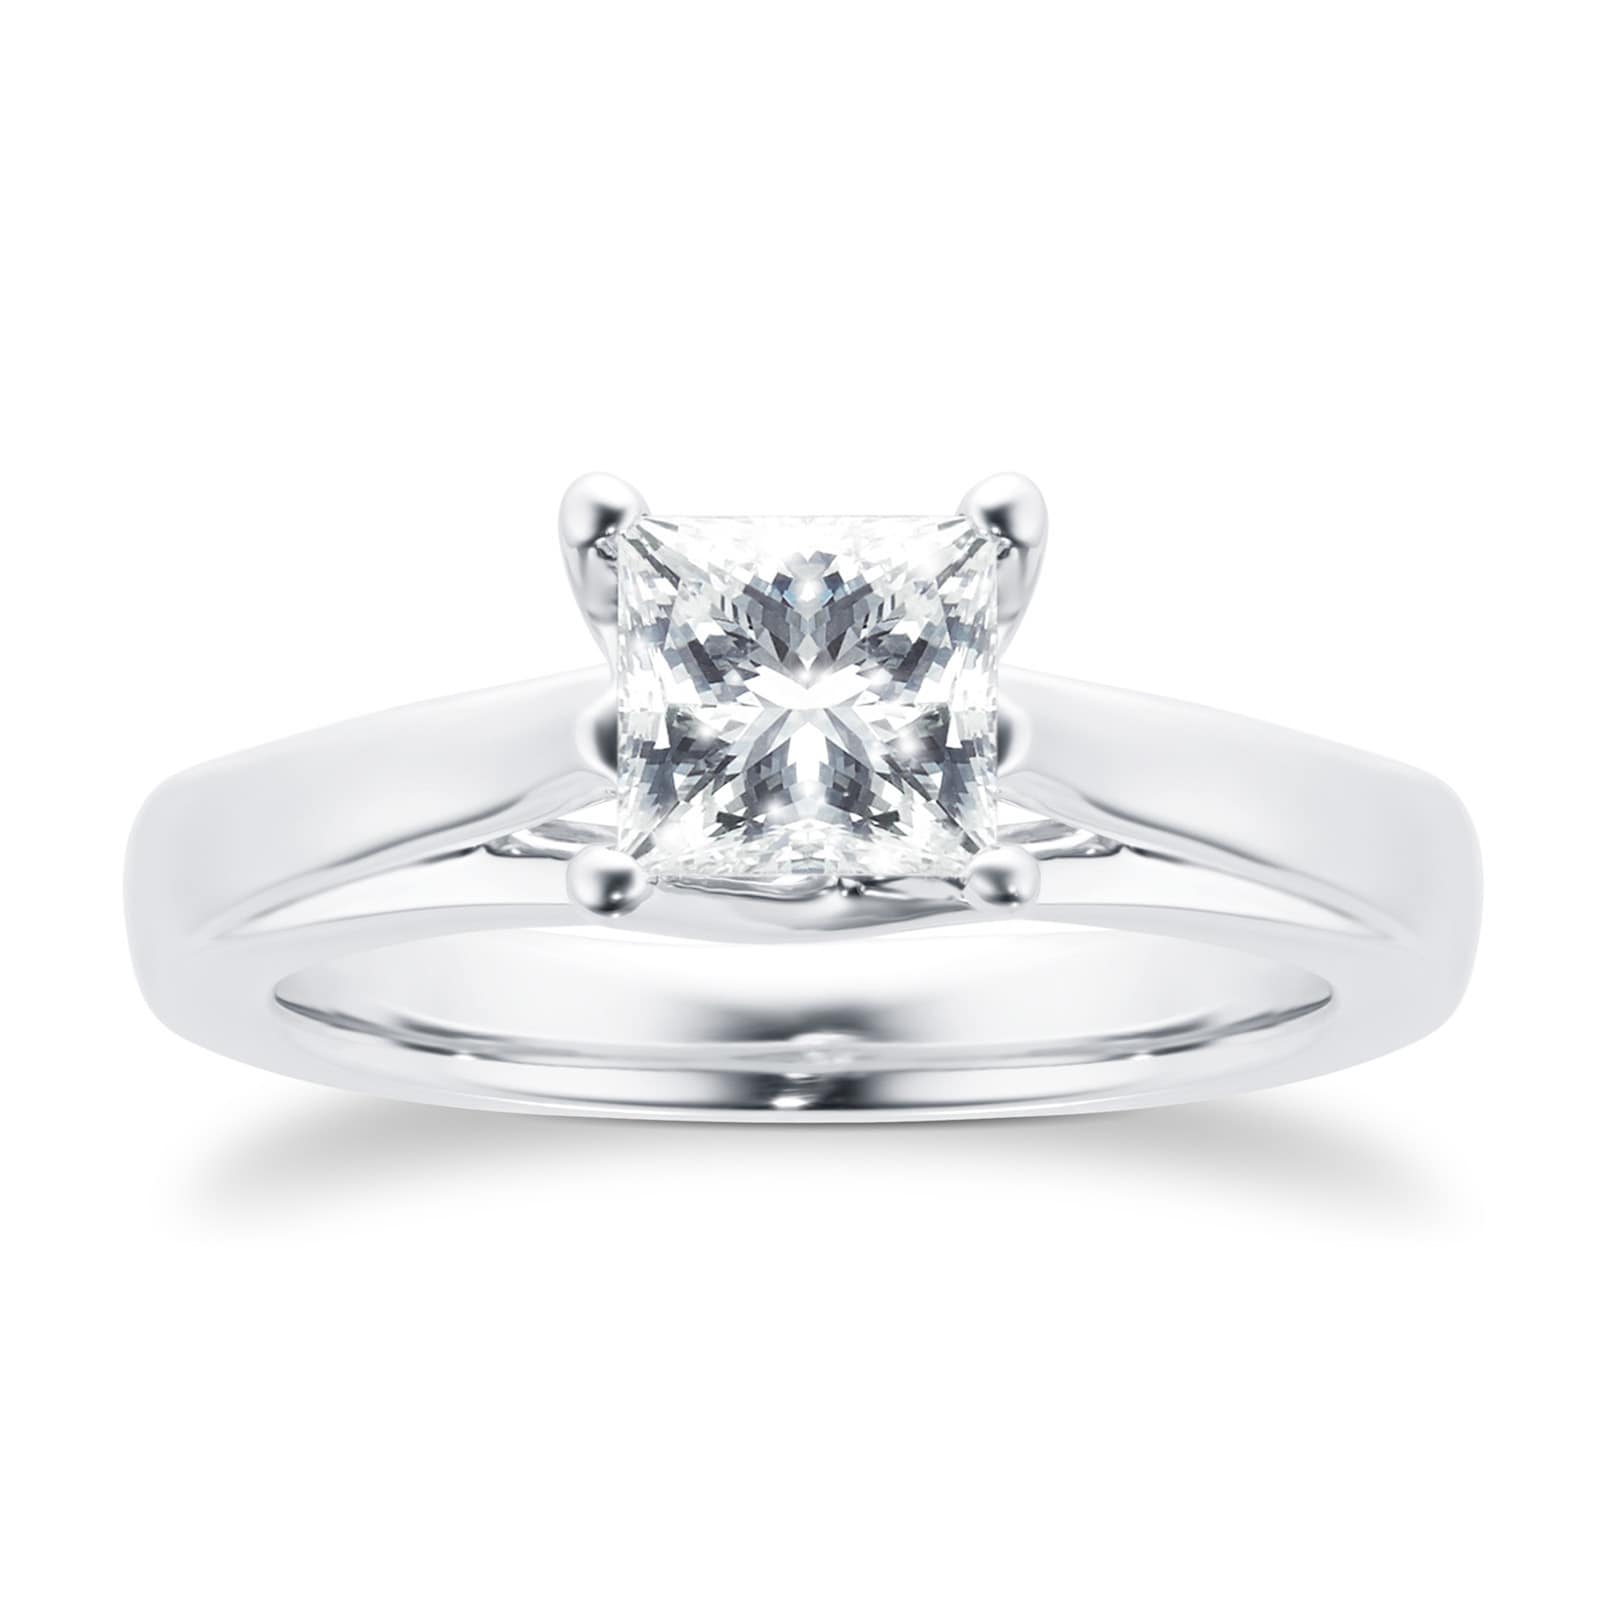 Platinum Princess Cut 1.00 Carat 88 Facet Diamond Ring - Ring Size K